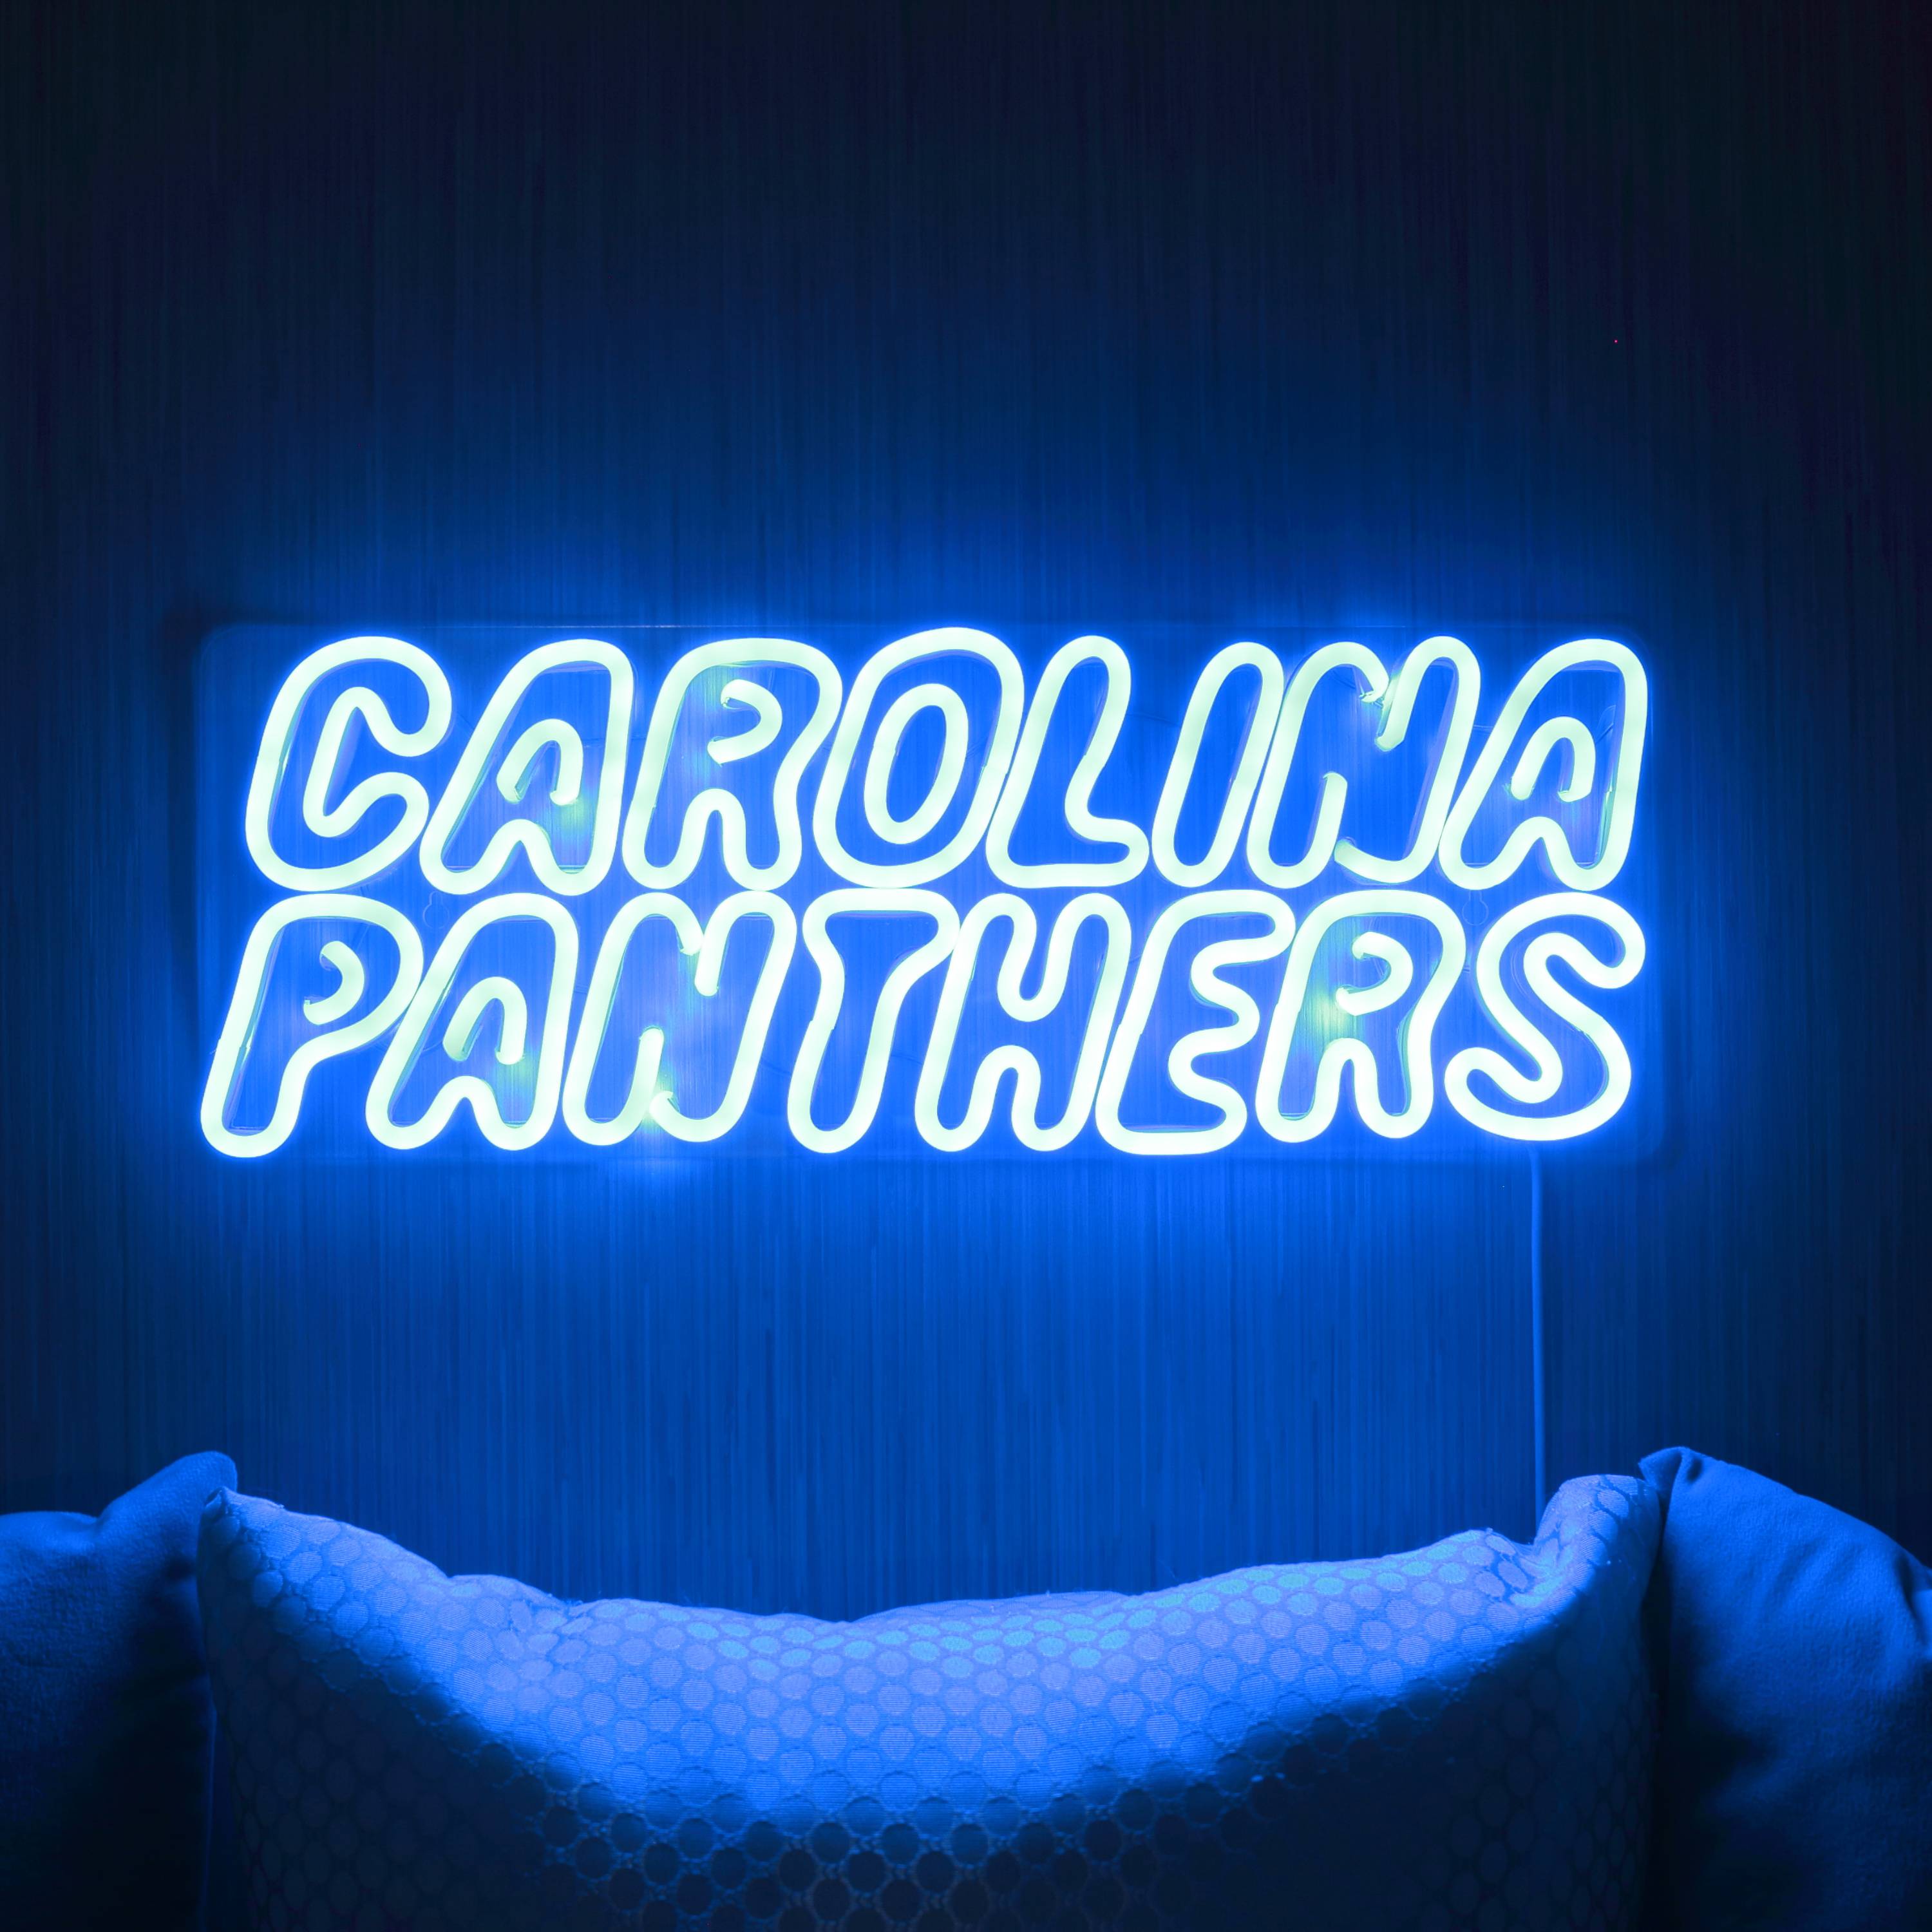 NFL "CAROLINA PANTHERS" Large Flex Neon LED Sign